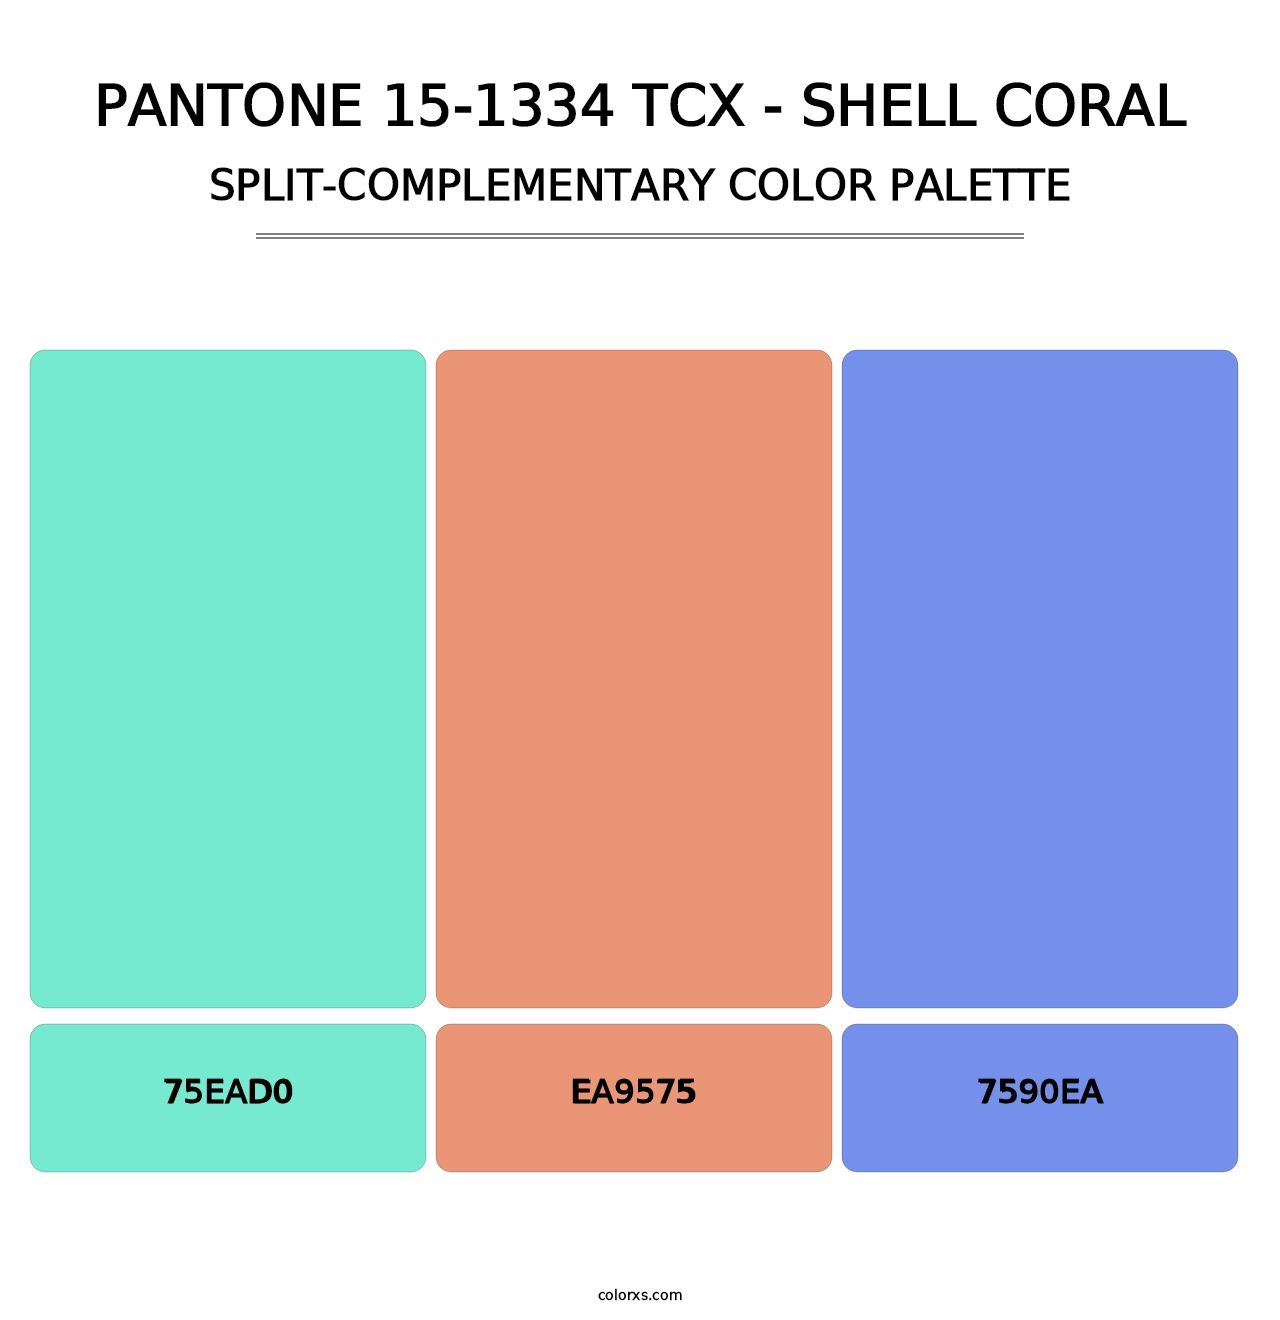 PANTONE 15-1334 TCX - Shell Coral - Split-Complementary Color Palette